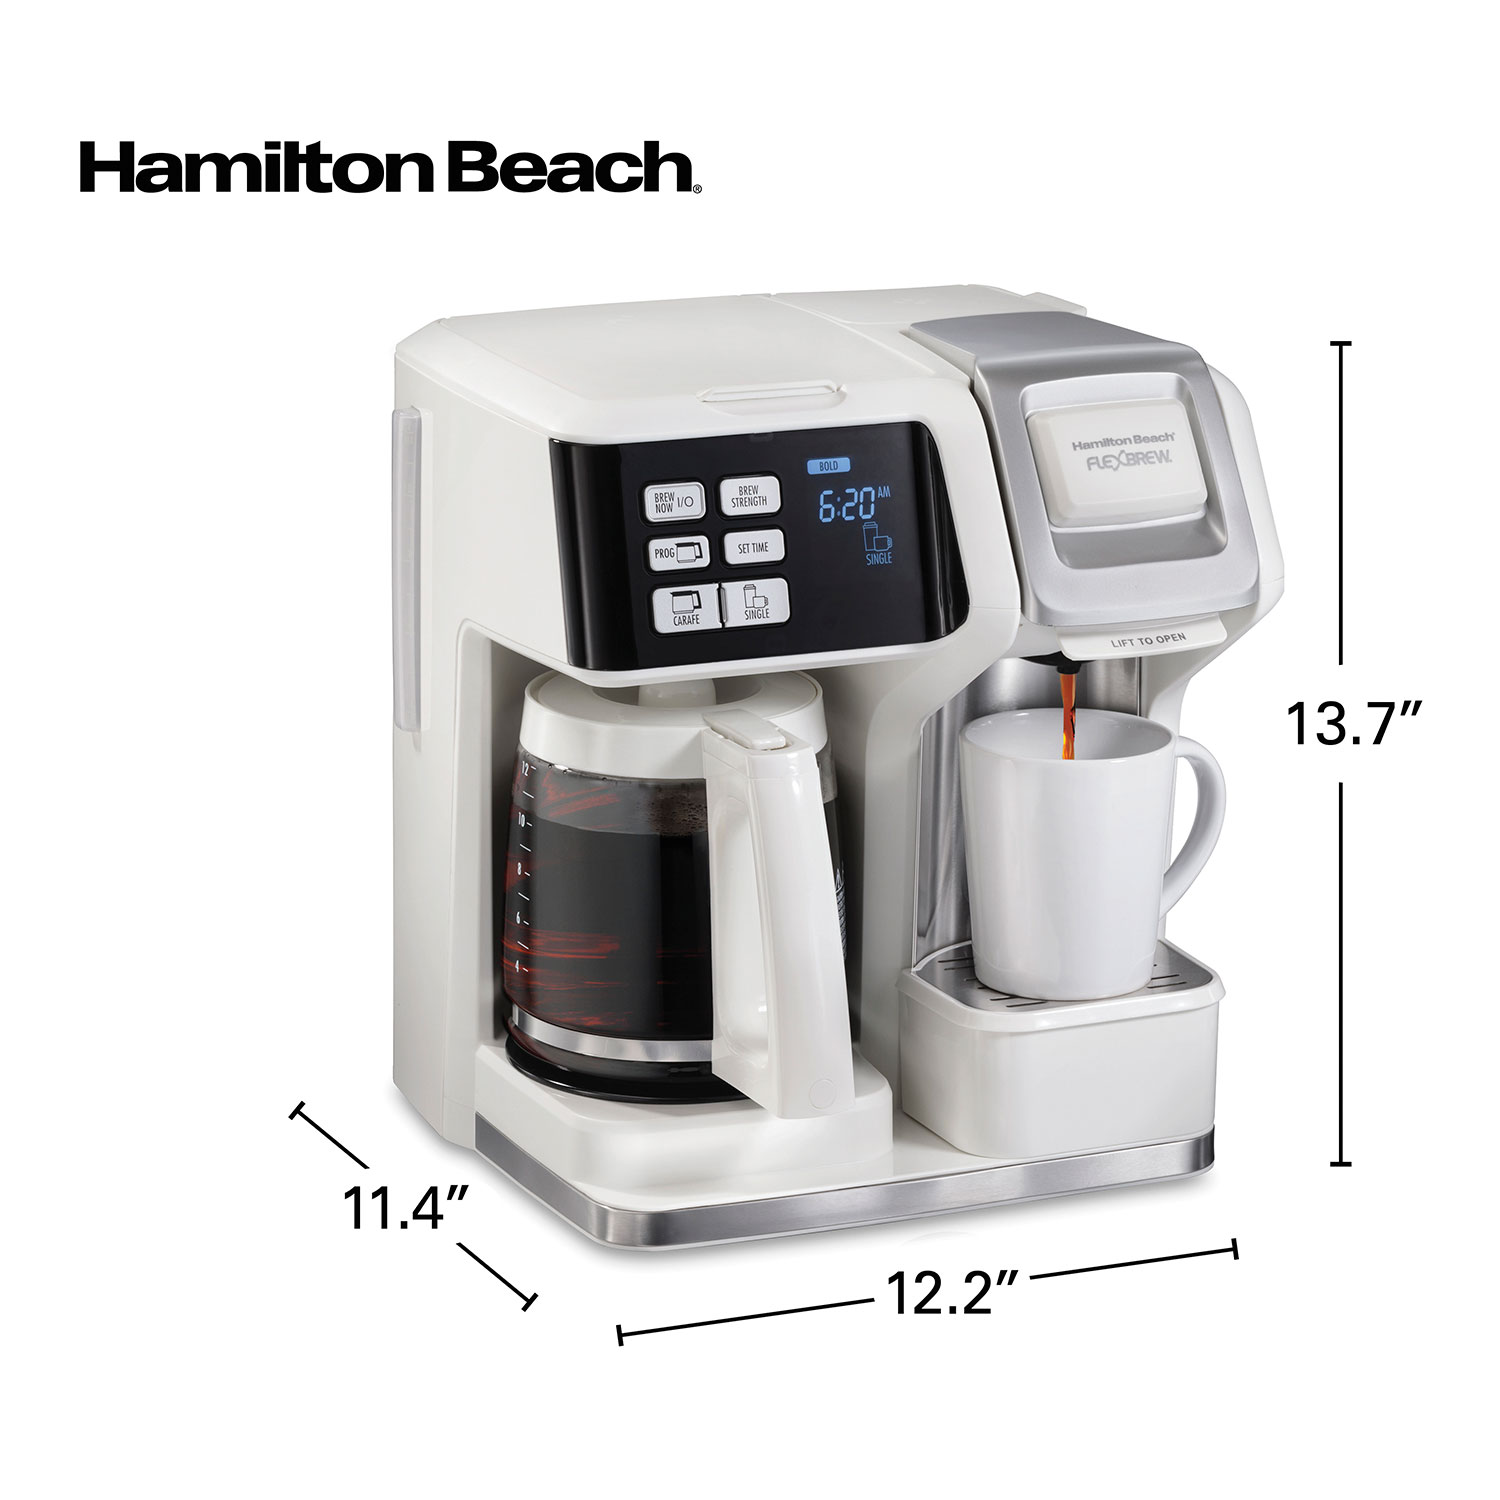 Tested Tuesday: FlexBrew 2-Way Coffee Maker by Hamilton Beach